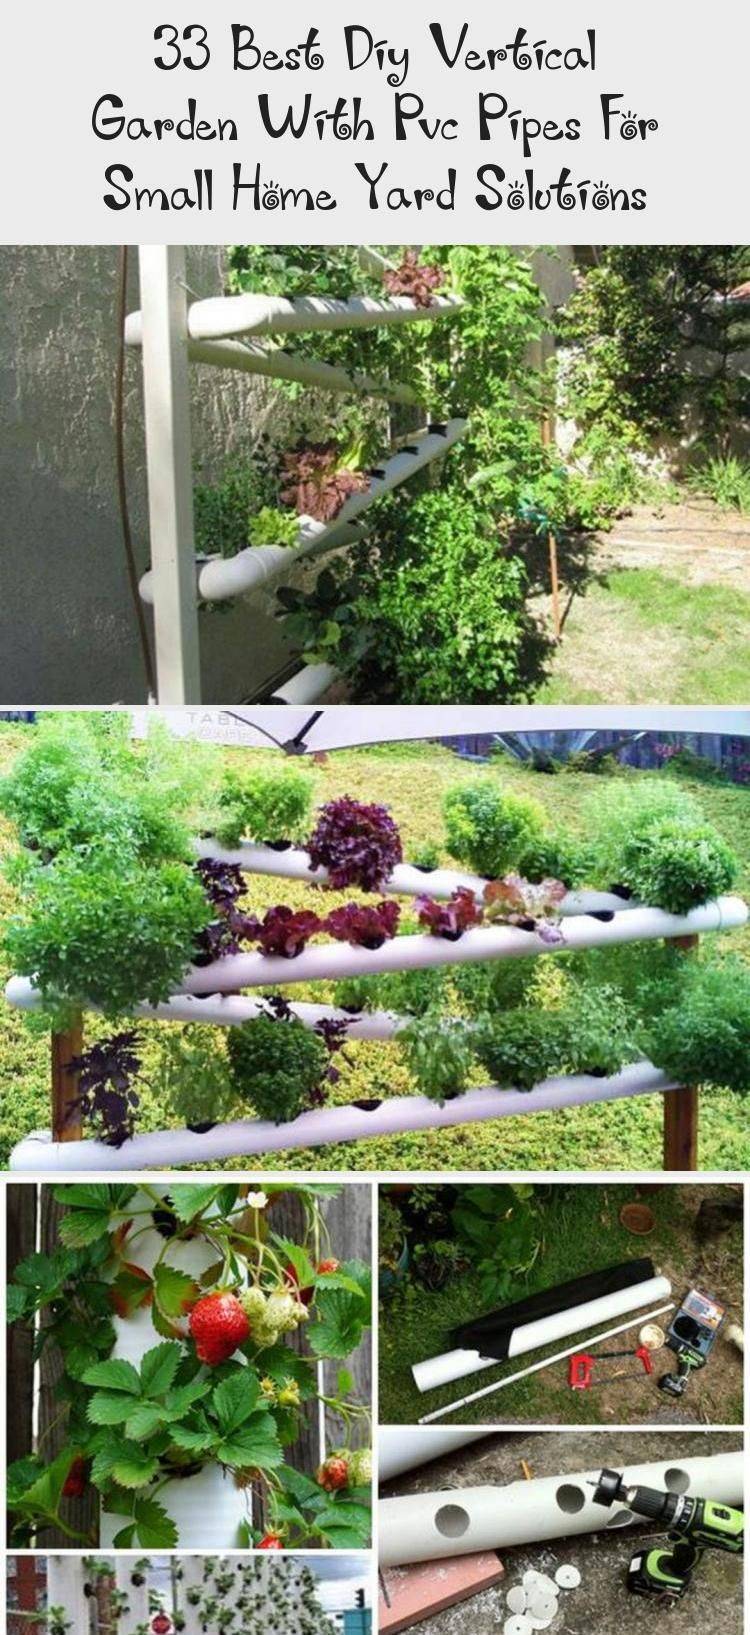 Self Watering Planters Diy Pvc Pipe Grden Plant